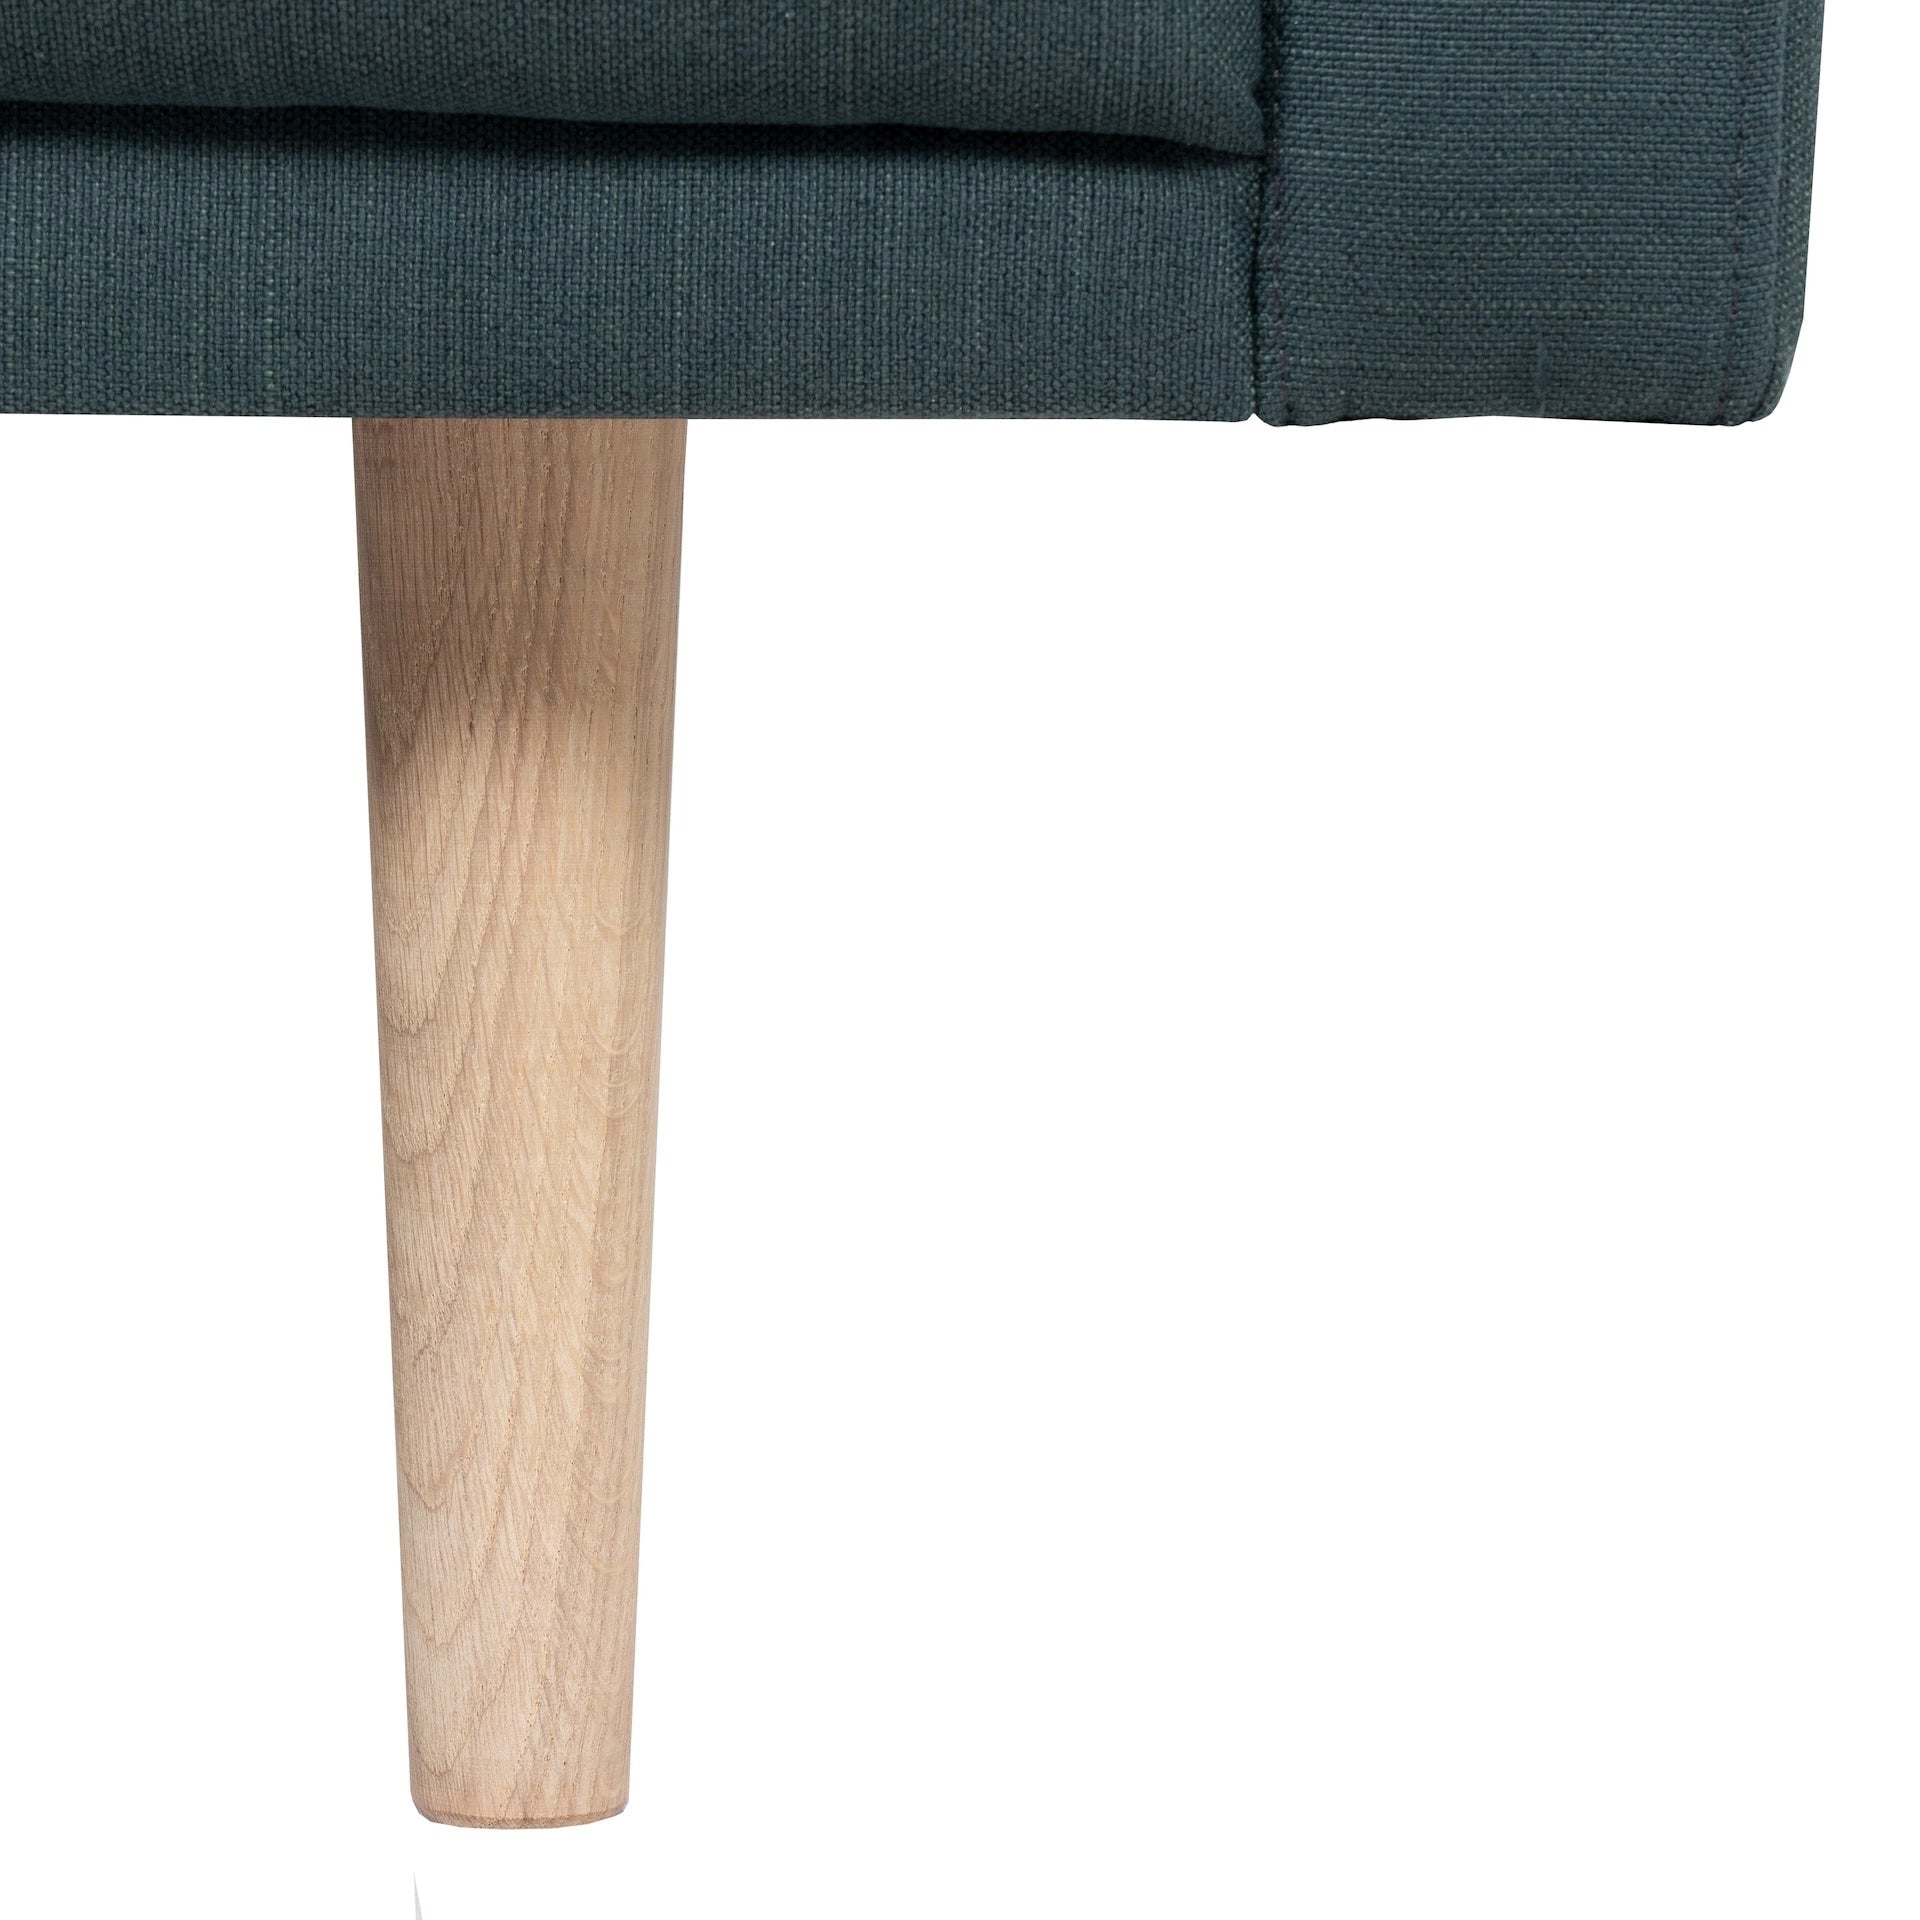 Furniture To Go Larvik 3 Seater Sofa - Dark Green, Oak Legs